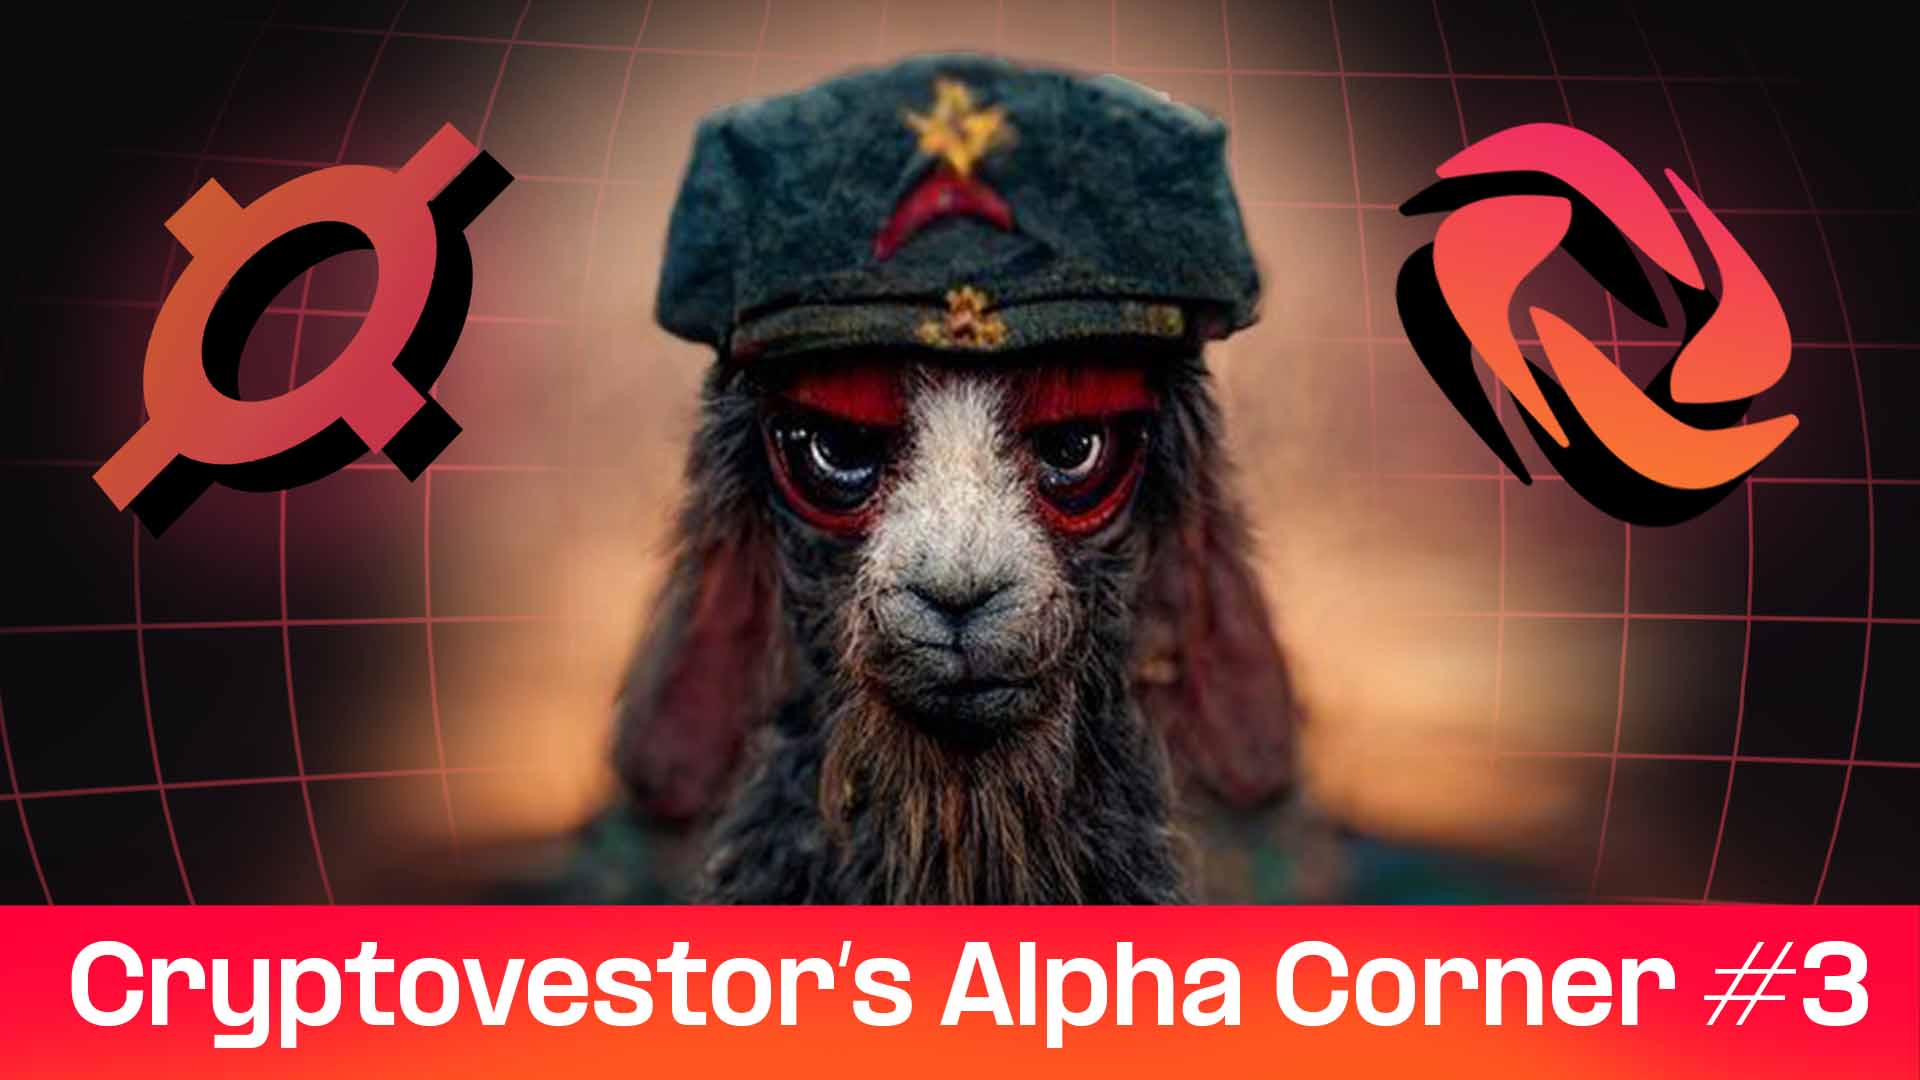 The Calm Before The v3 Storm - Cryptovestor’s Alpha Corner #3